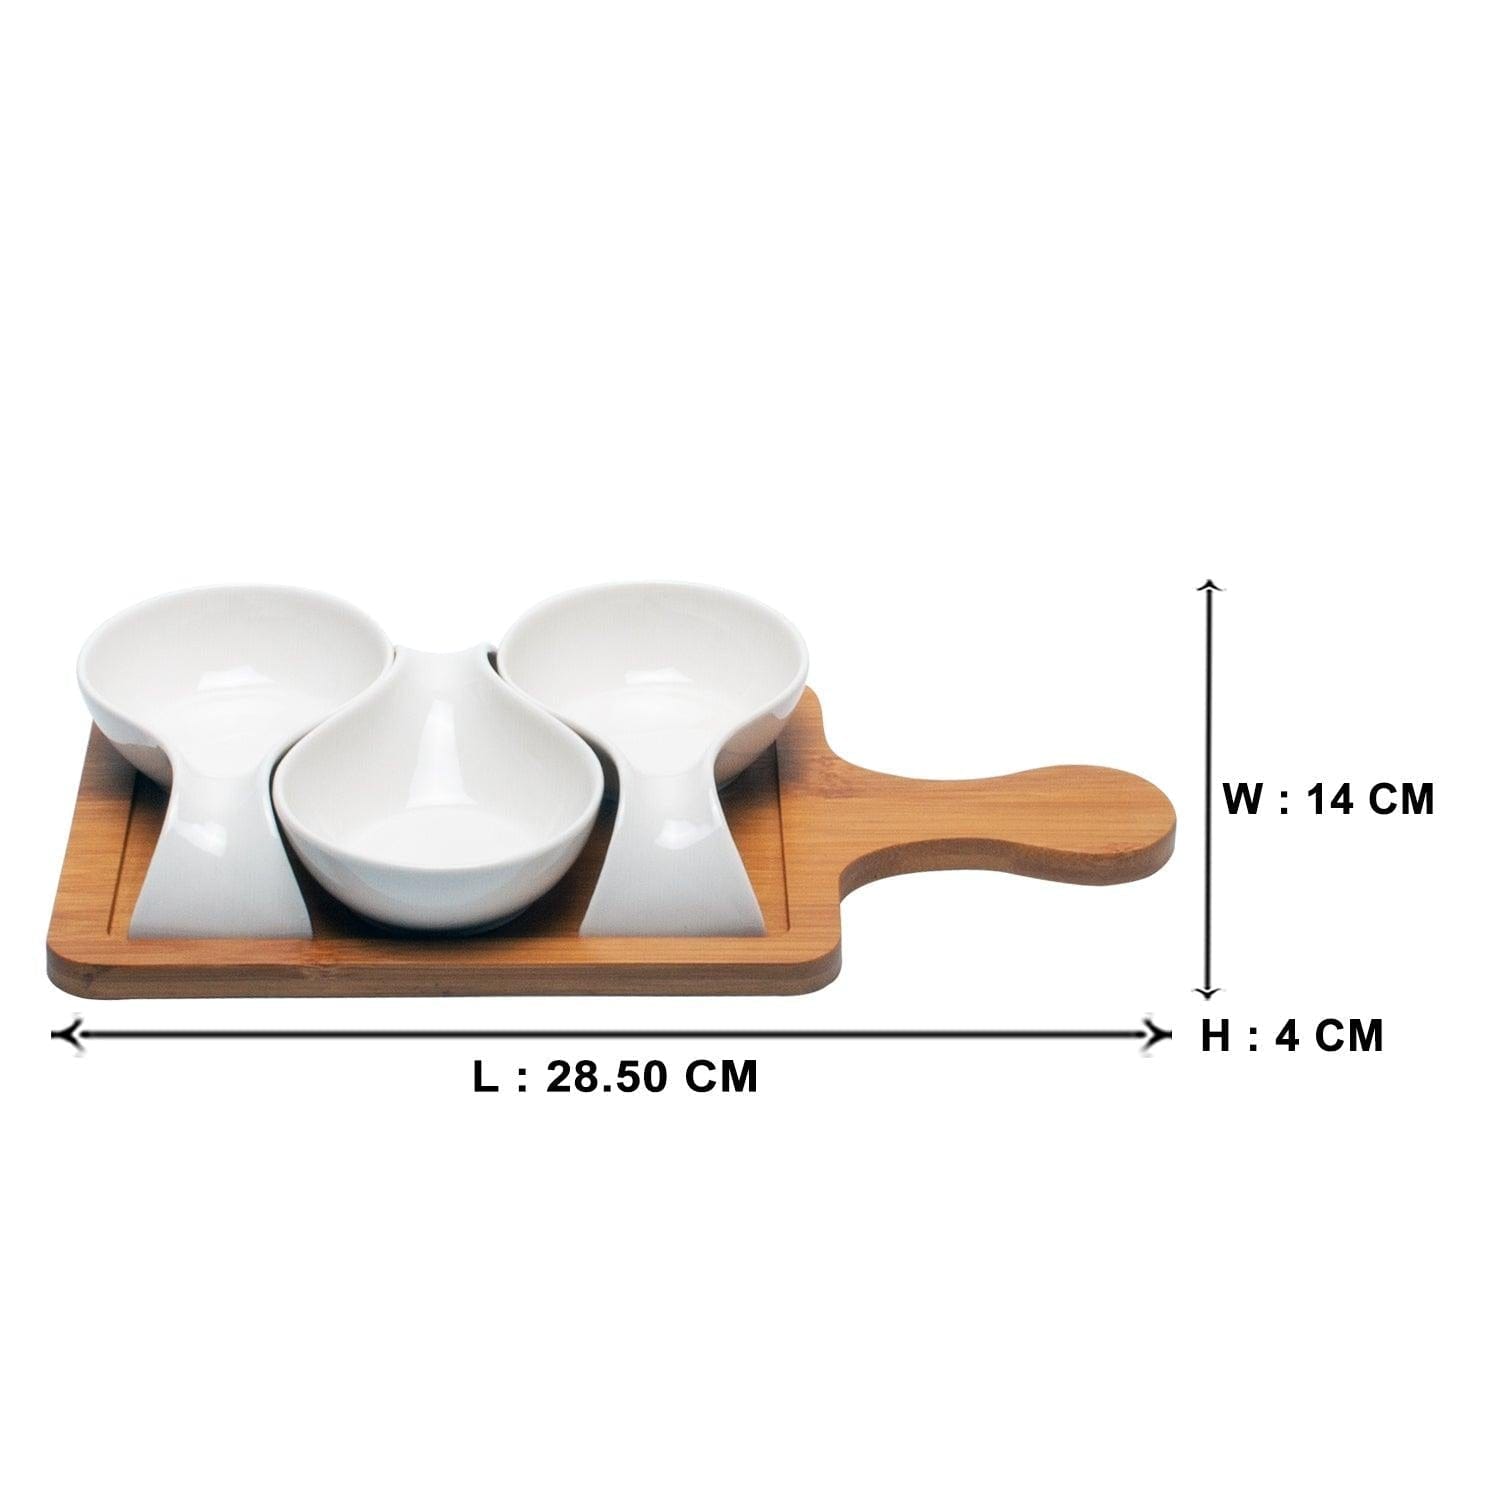 Splendor Serving Platter with 3 Stylish Serving Bowls on Wooden Tray Set